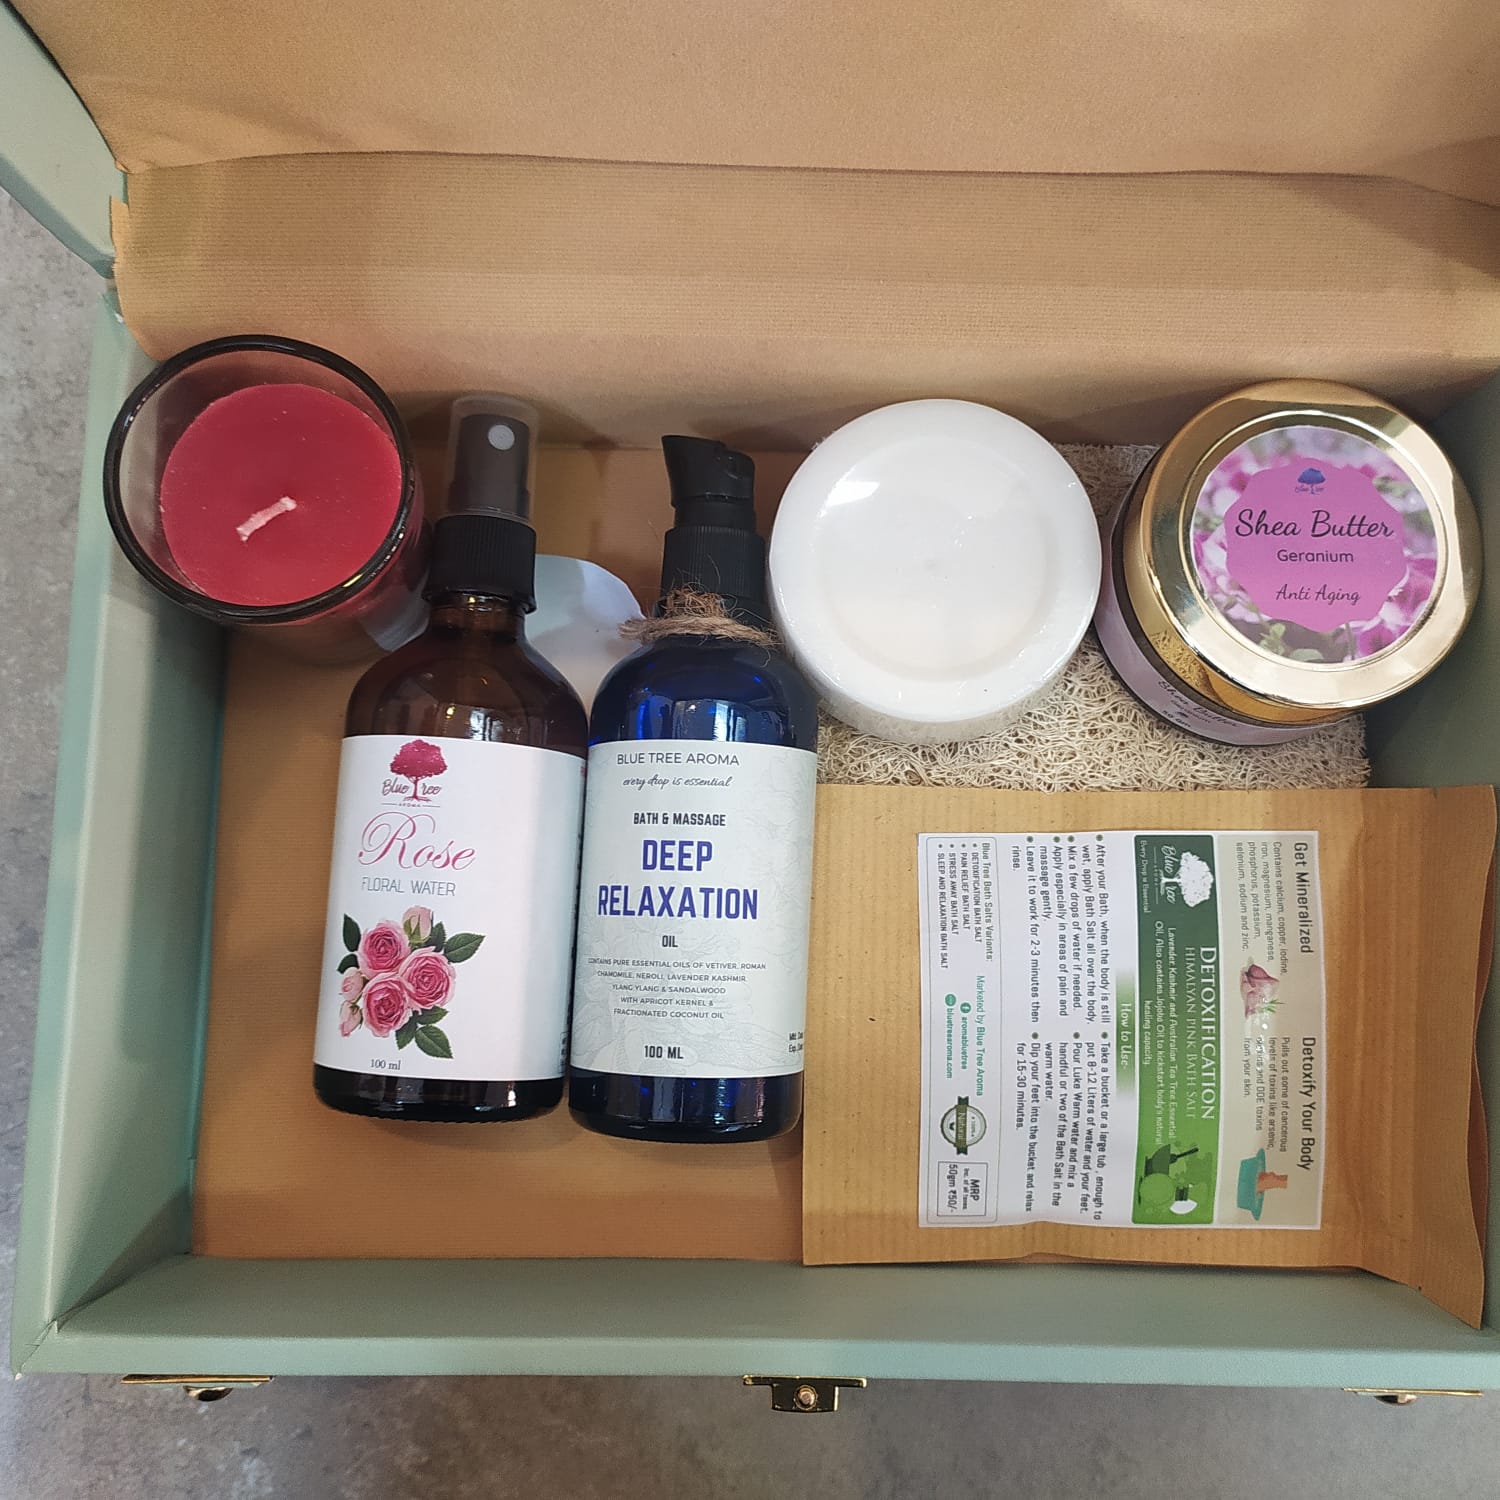 Floral Aromatherapie Bath Kit